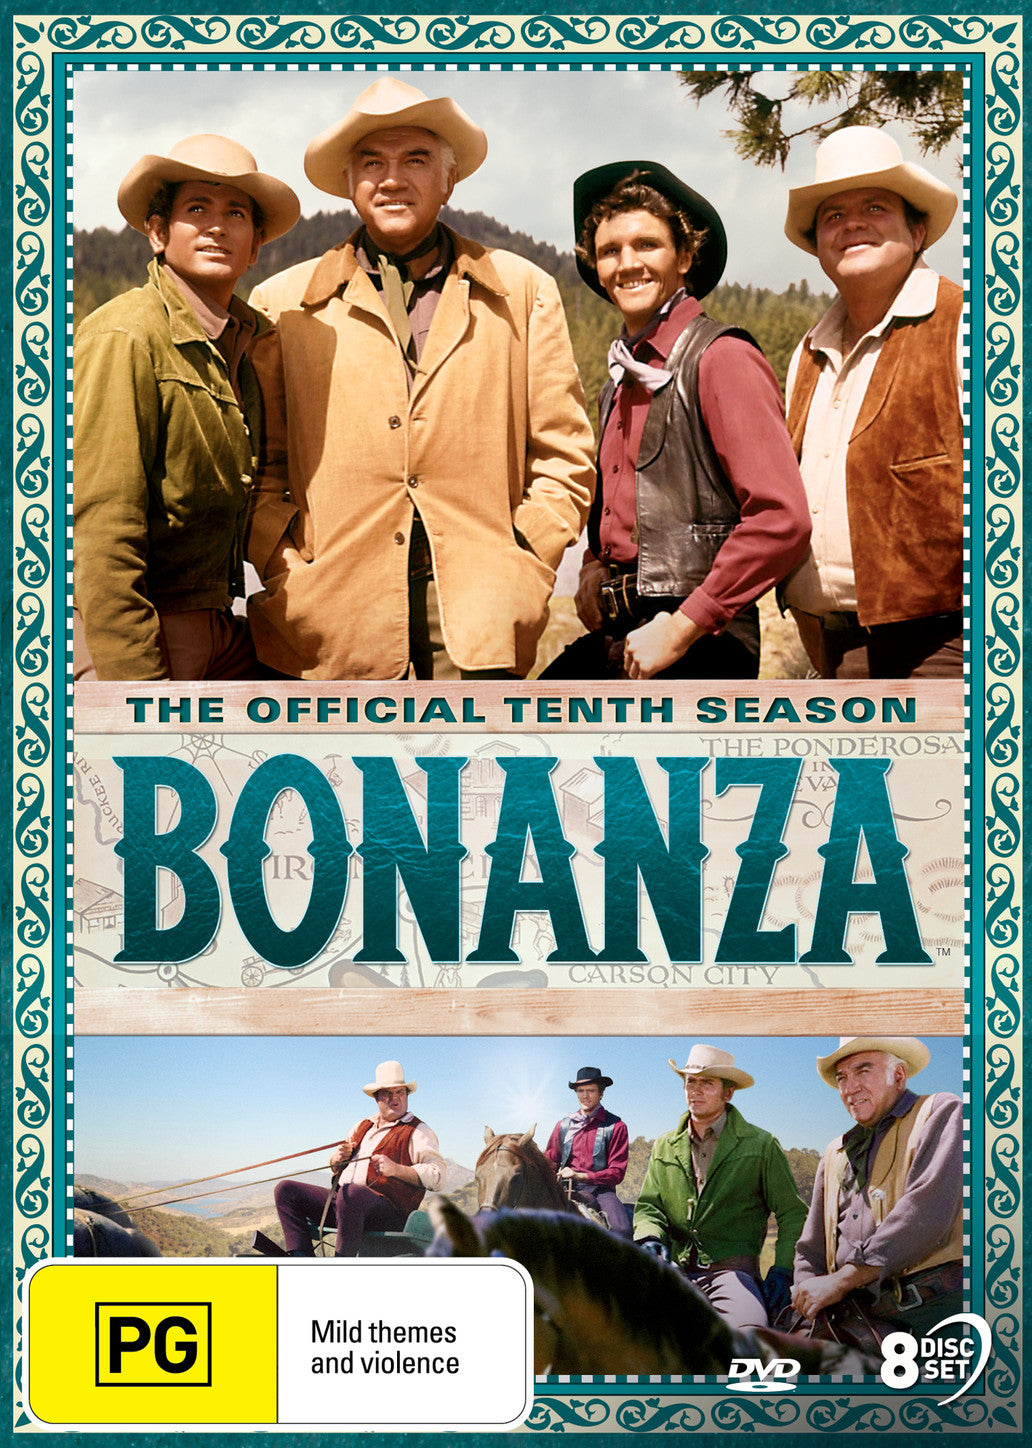 BONANZA - THE OFFICIAL TENTH SEASON